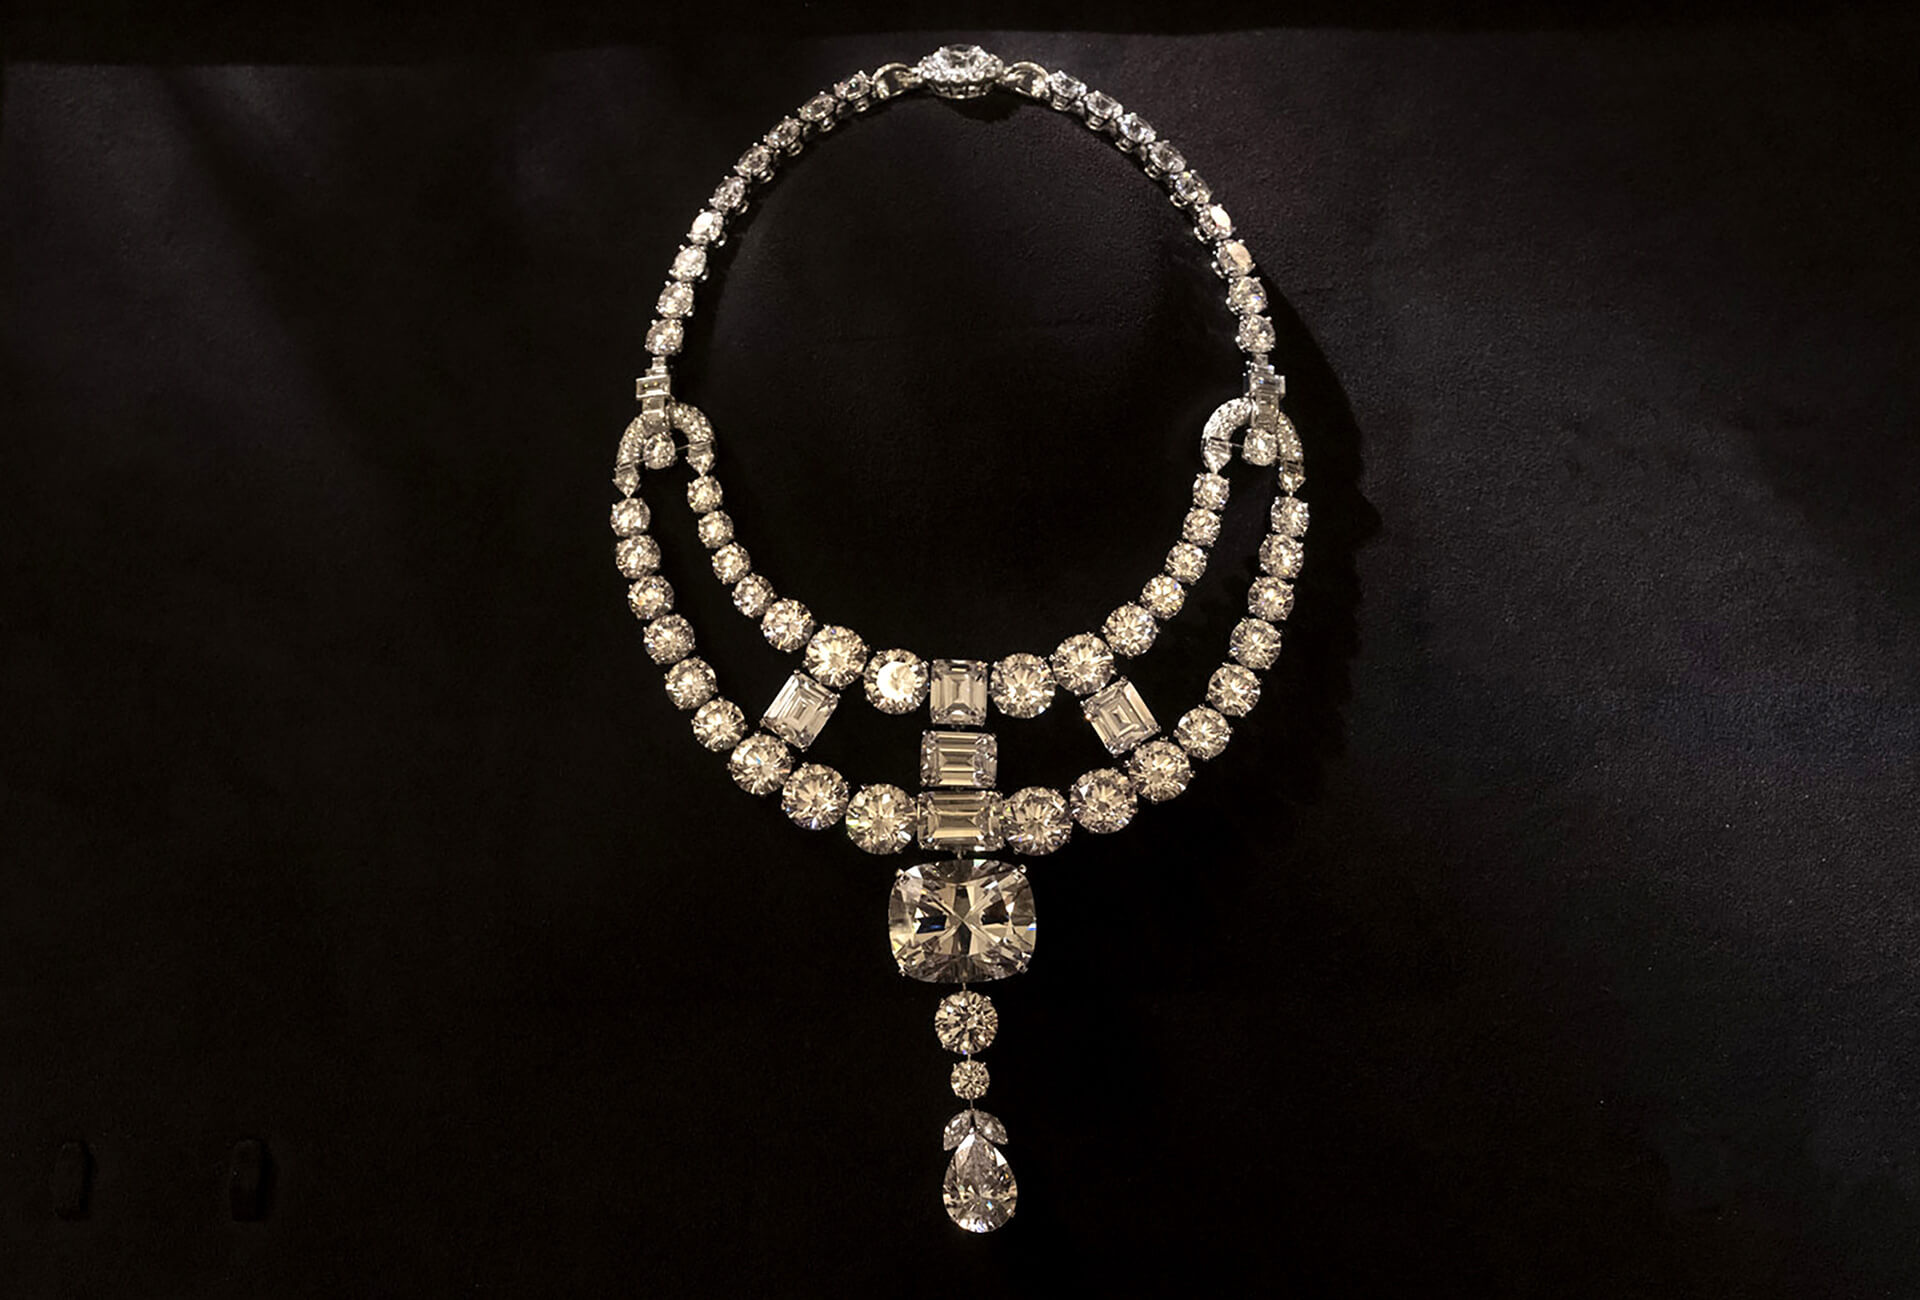 nawanagar necklace